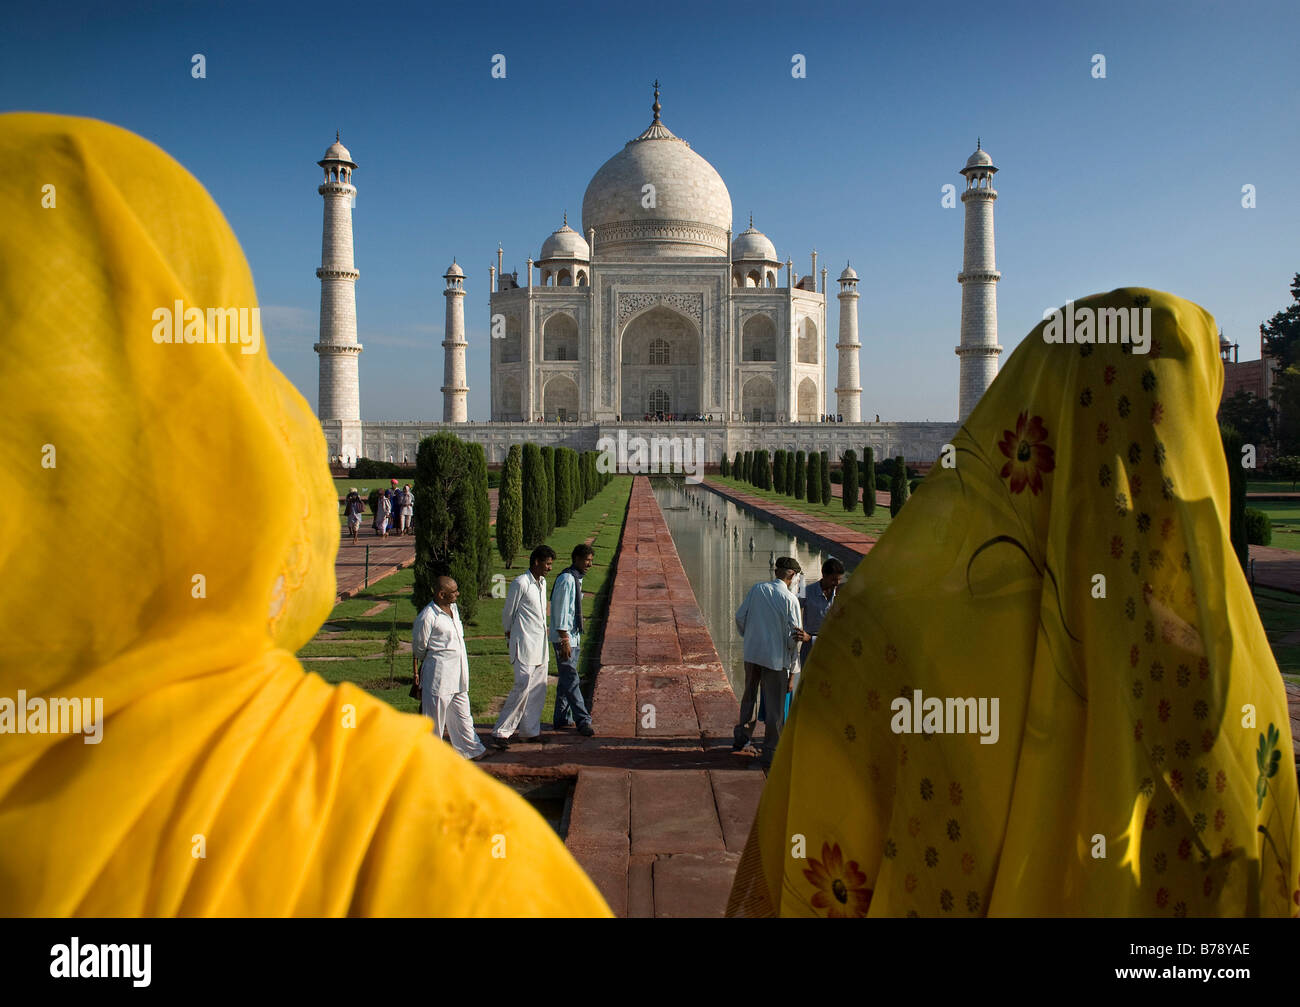 Women wearing saris in front of the mausoleum of the Taj Mahal, Agra, Uttar Pradesh, North India, India, Asia Stock Photo